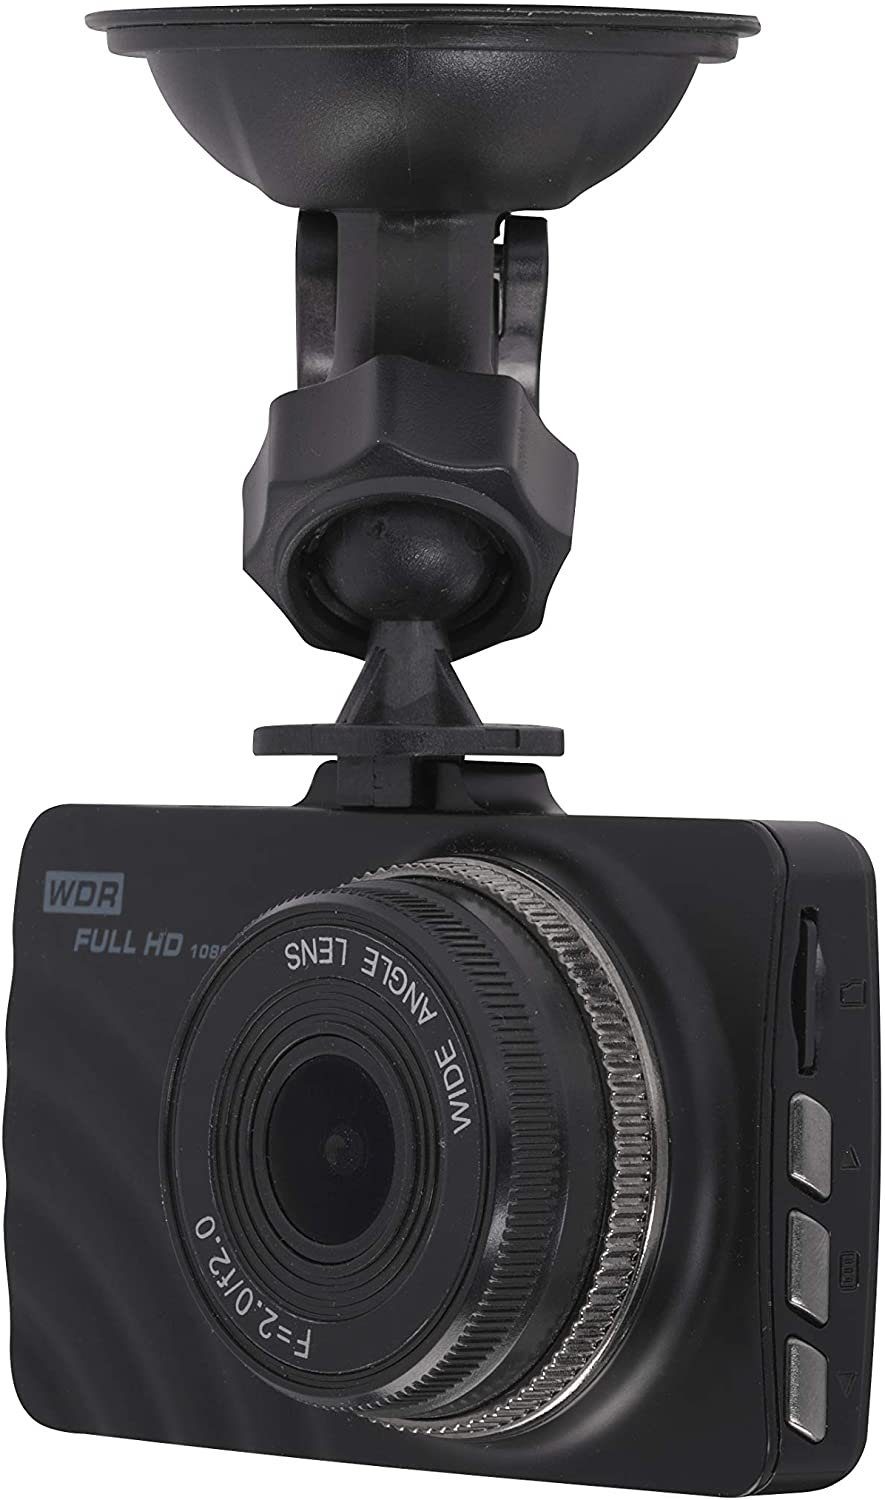 Display, Denver Schwarz G-Sensor Dashcam Kamera DENVER 12 Mikrofon (Full Auto MPixel HD) FULL-HD Dashcam